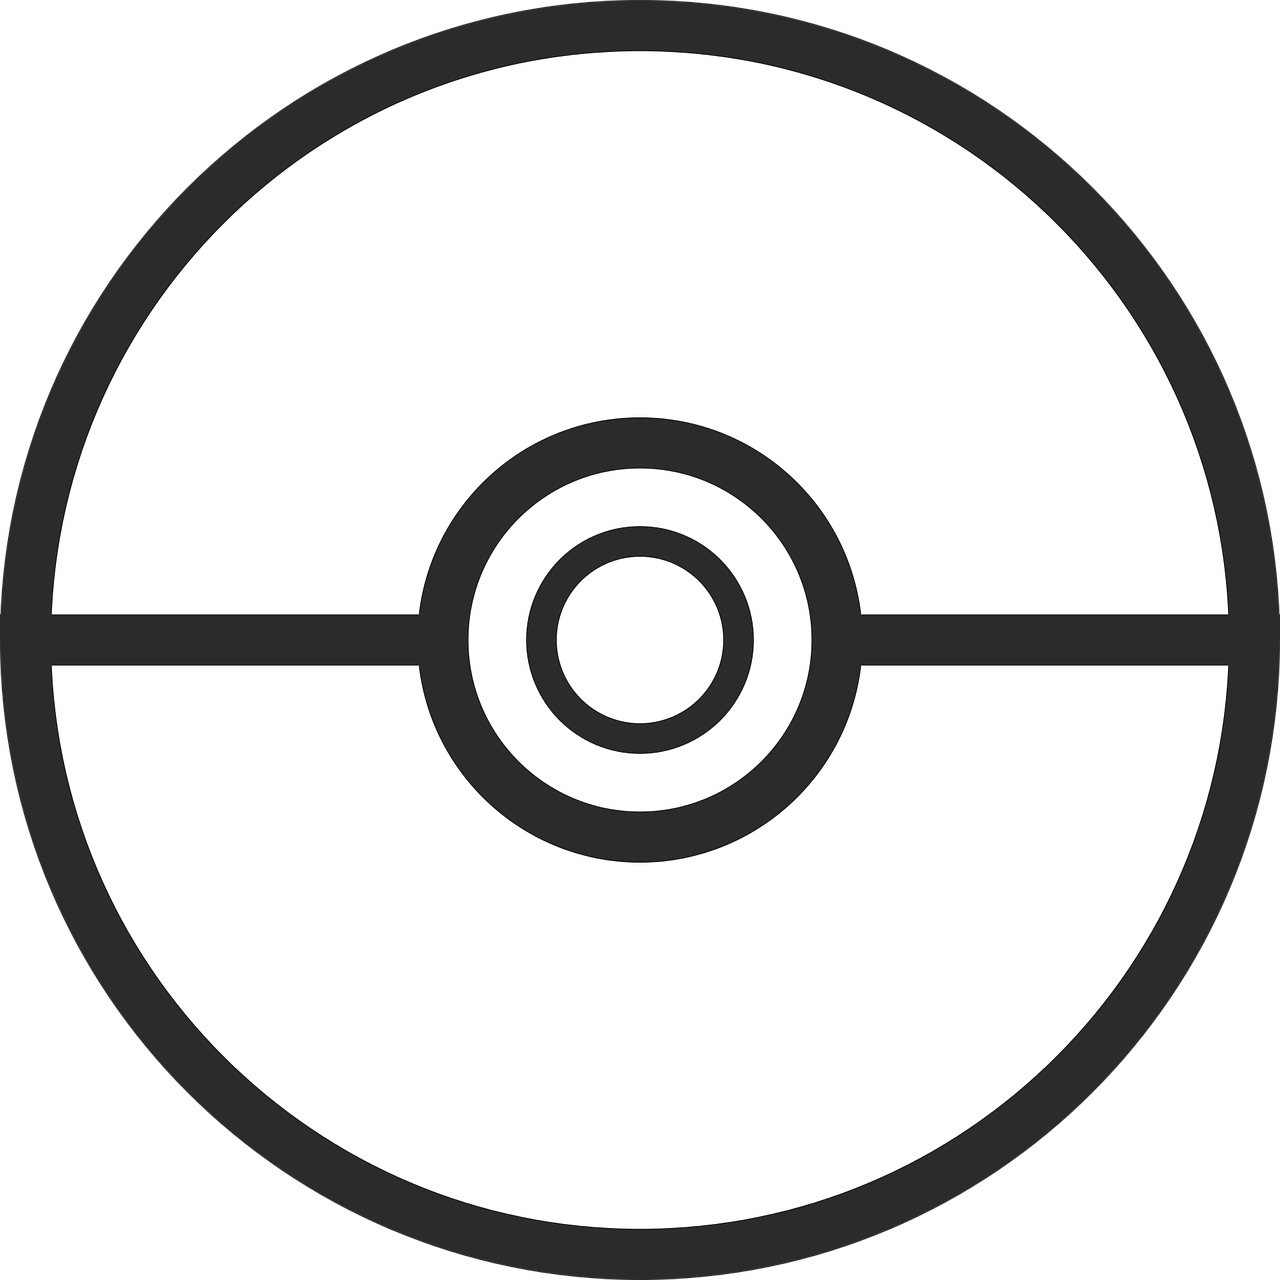 Pokeball clipart black and white. Pokemon go png image